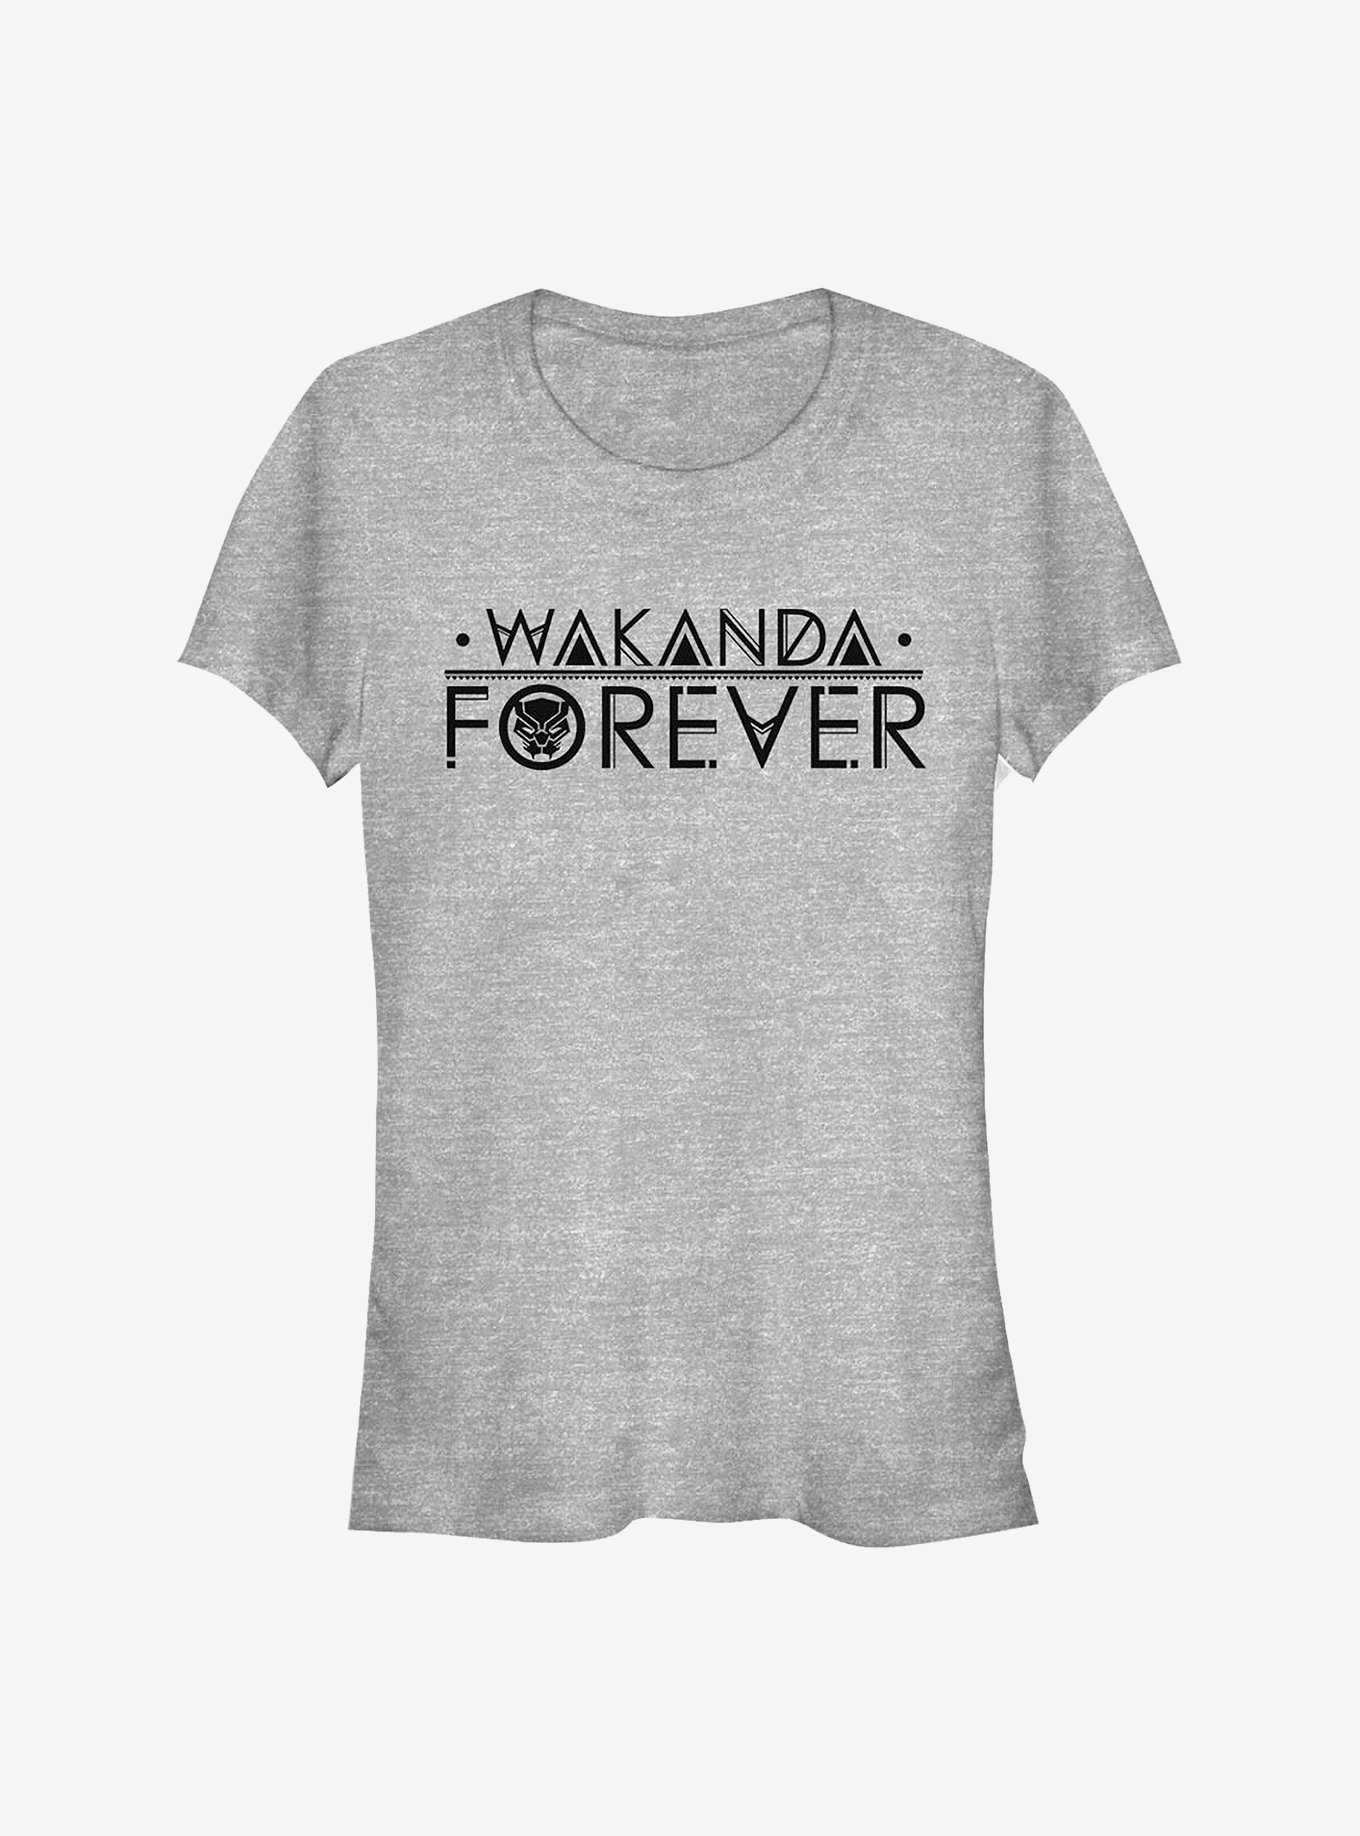 Marvel Black Panther Wakanda Forever Text Girls T-Shirt, , hi-res